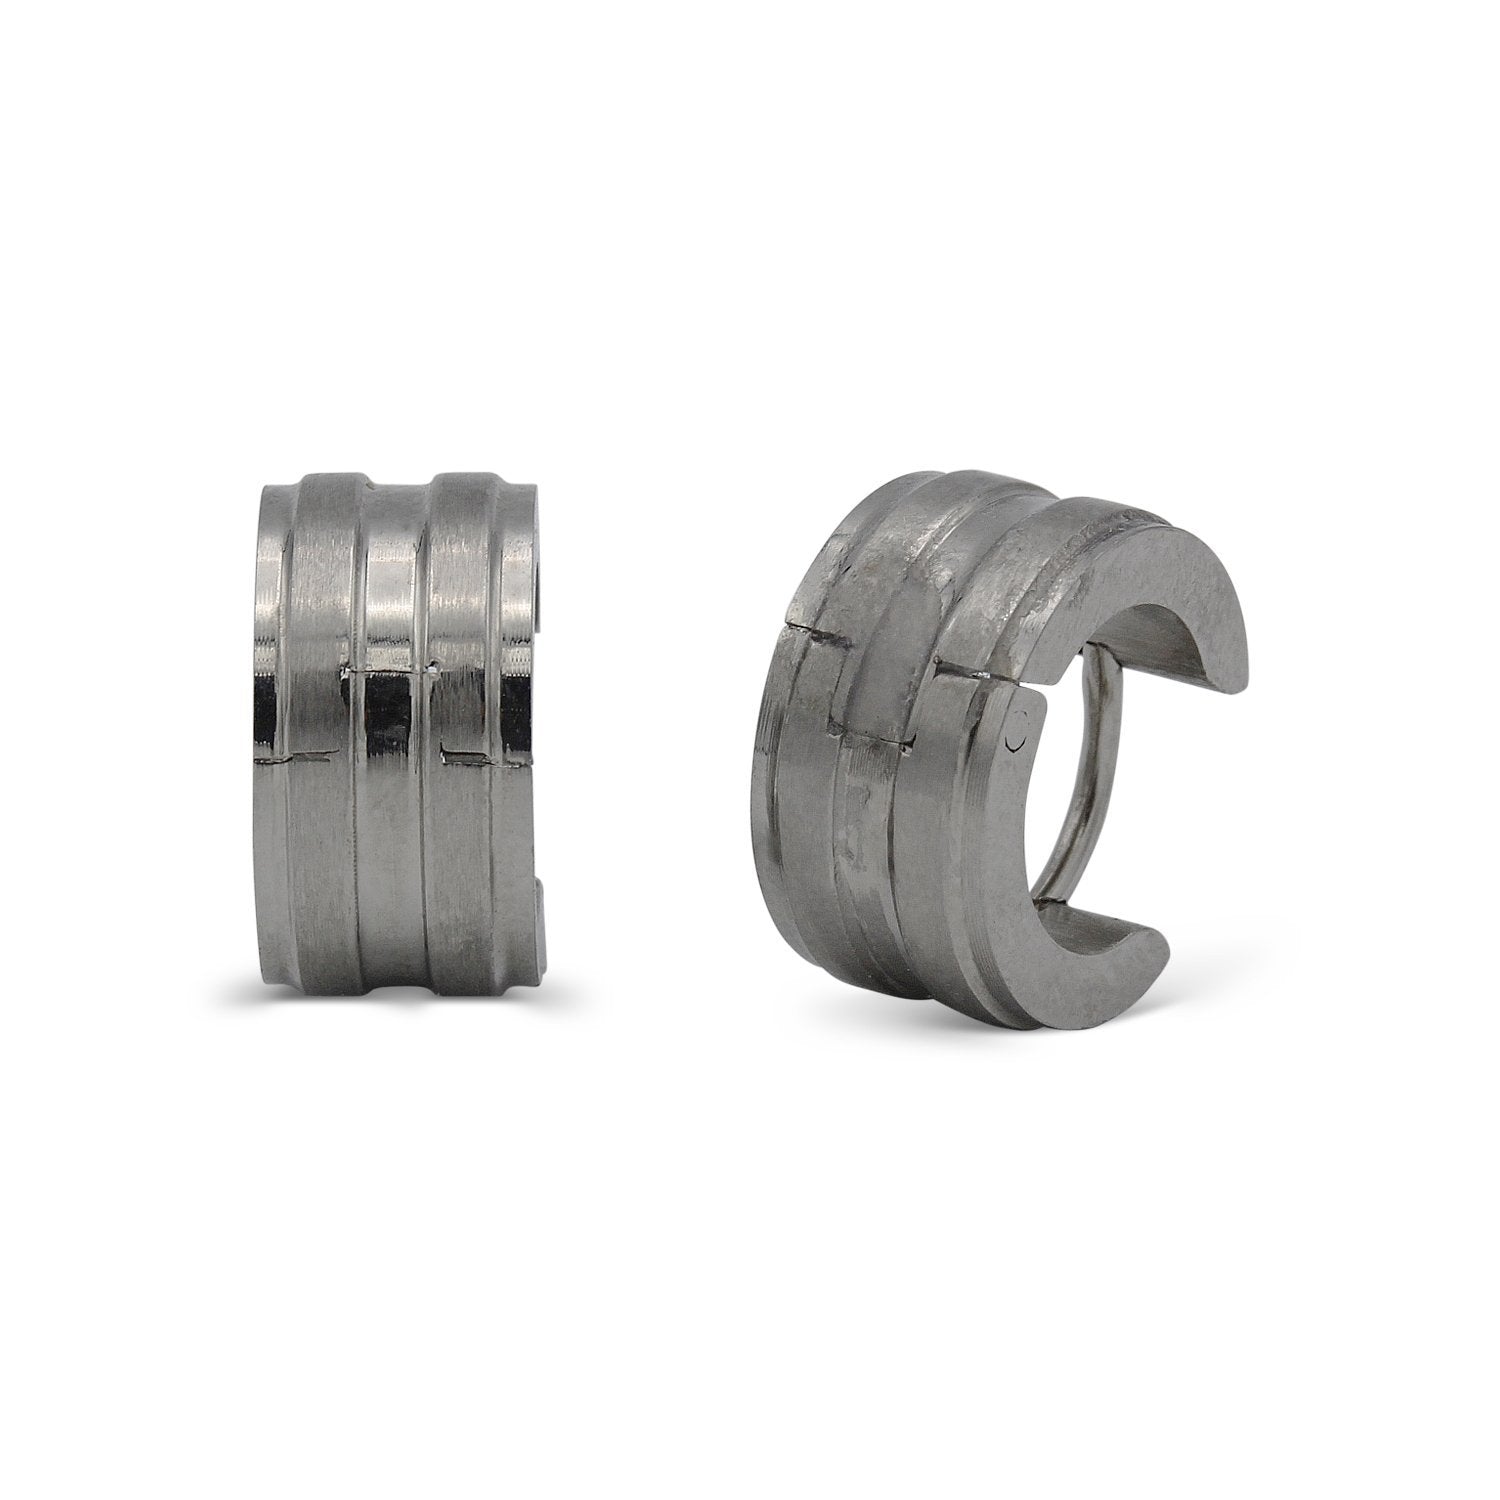 304 Stainless Steel Huggie Hoop Earrings for Jewelry Making - ChinaGoods